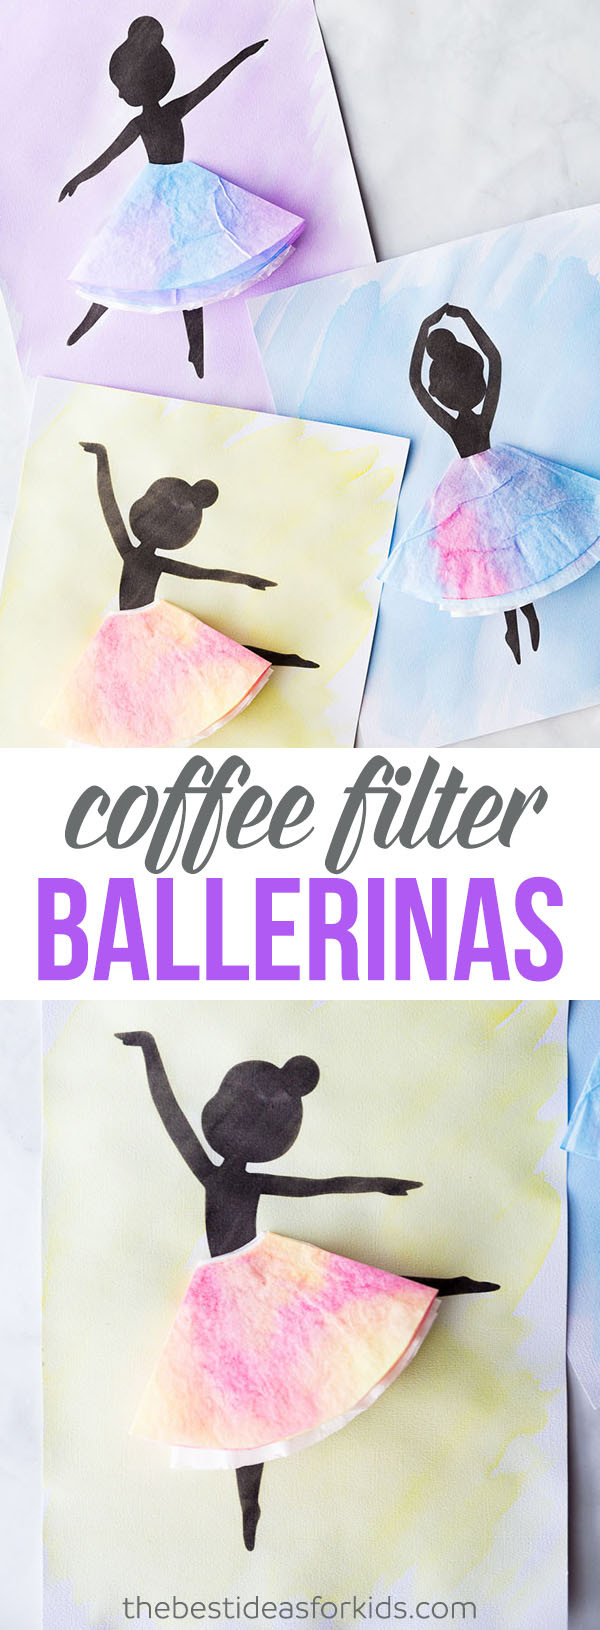 The Best Ideas For Kids
 Ballerina Silhouette The Best Ideas for Kids